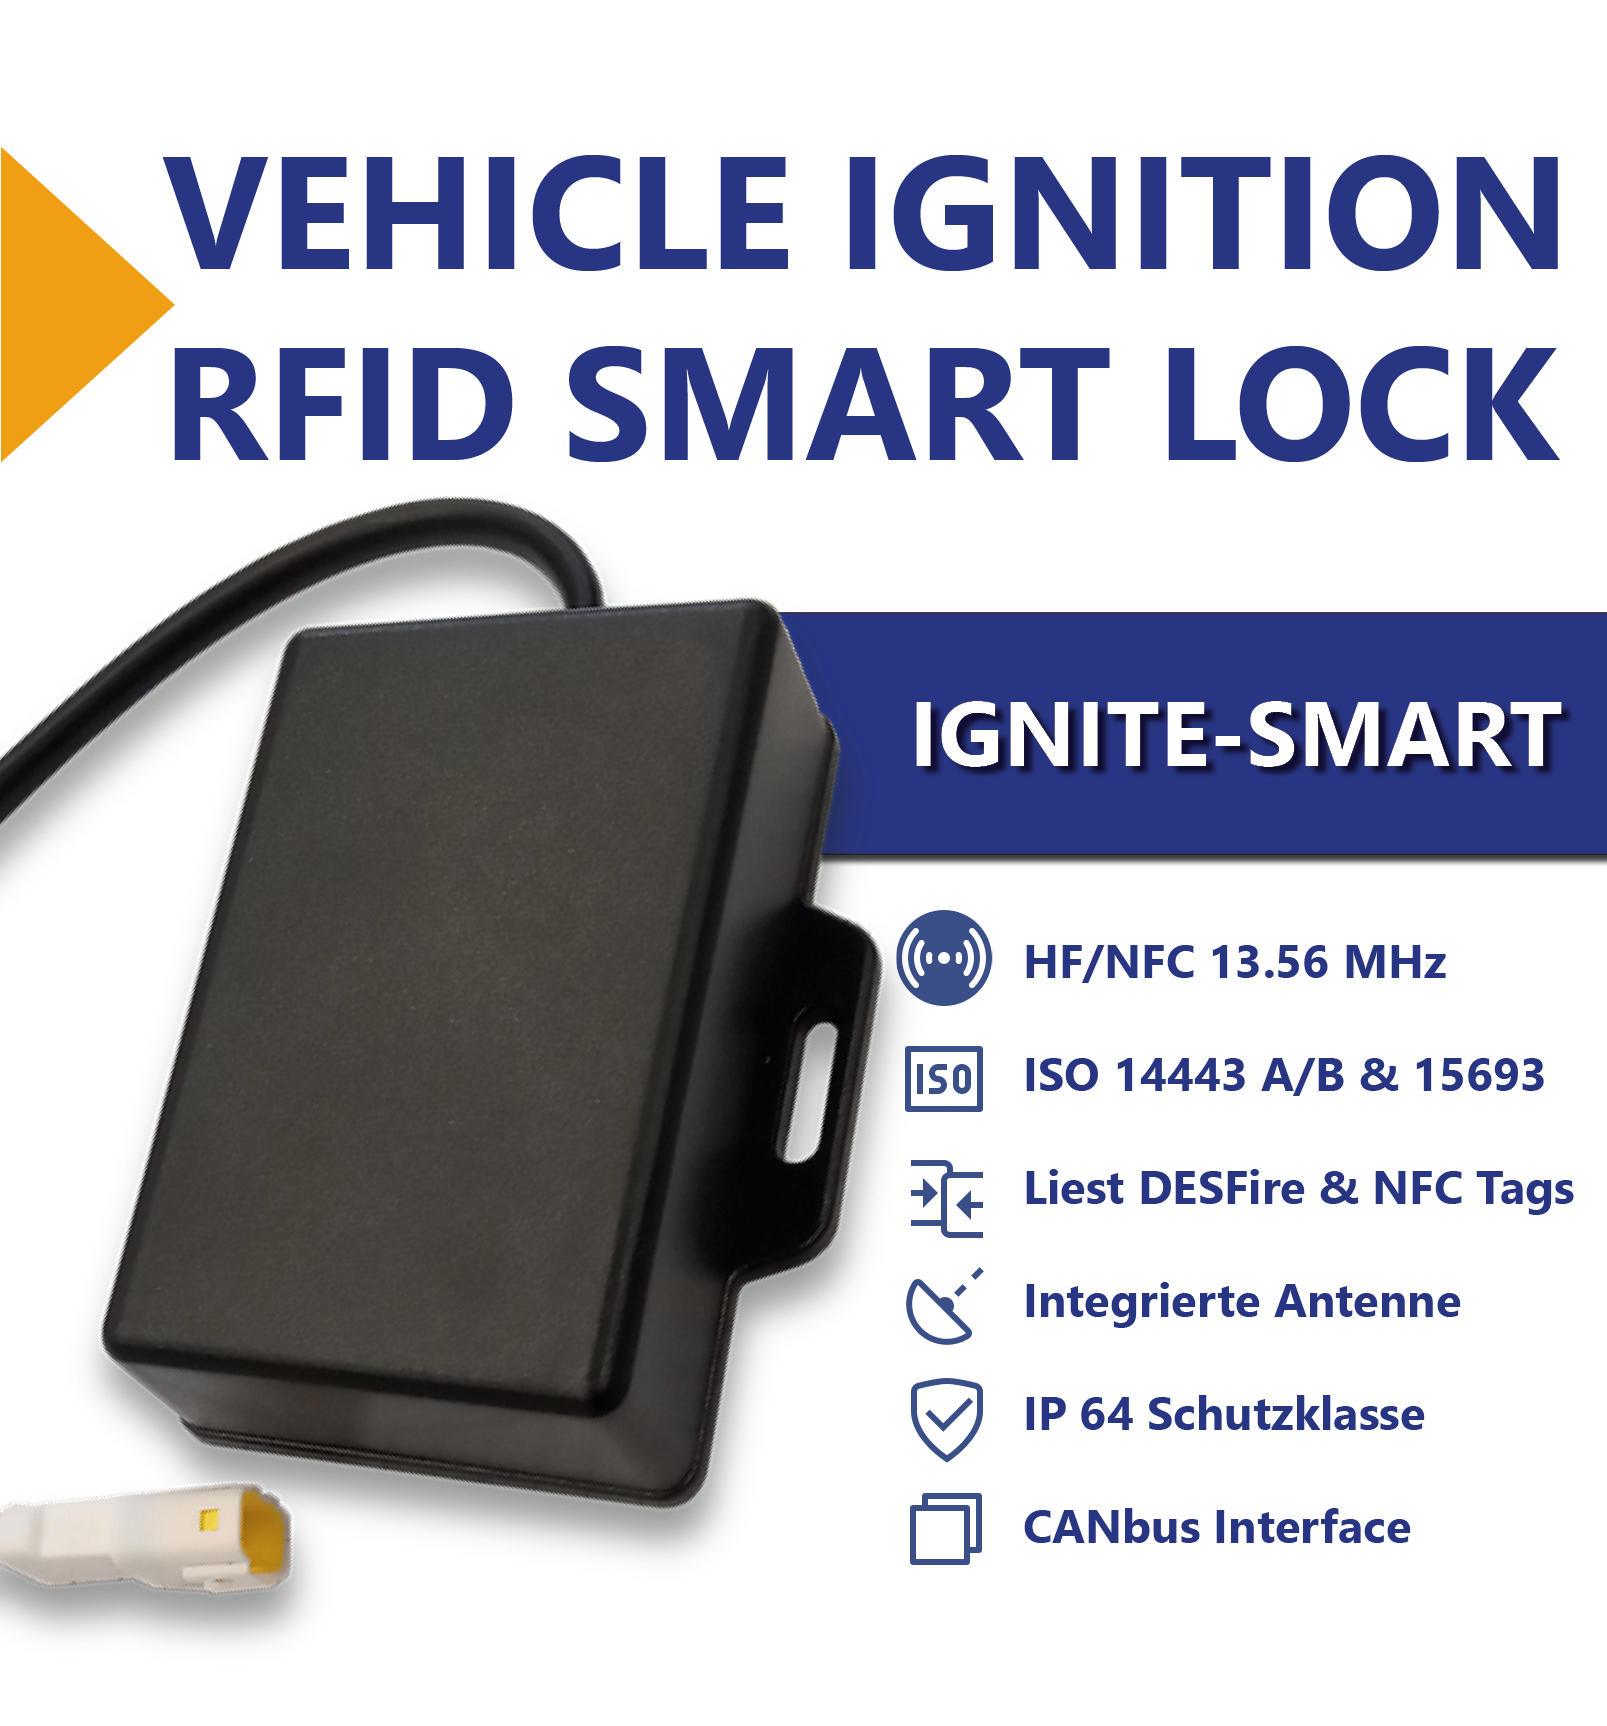 Vehicle Ignition RFID Smart Lock